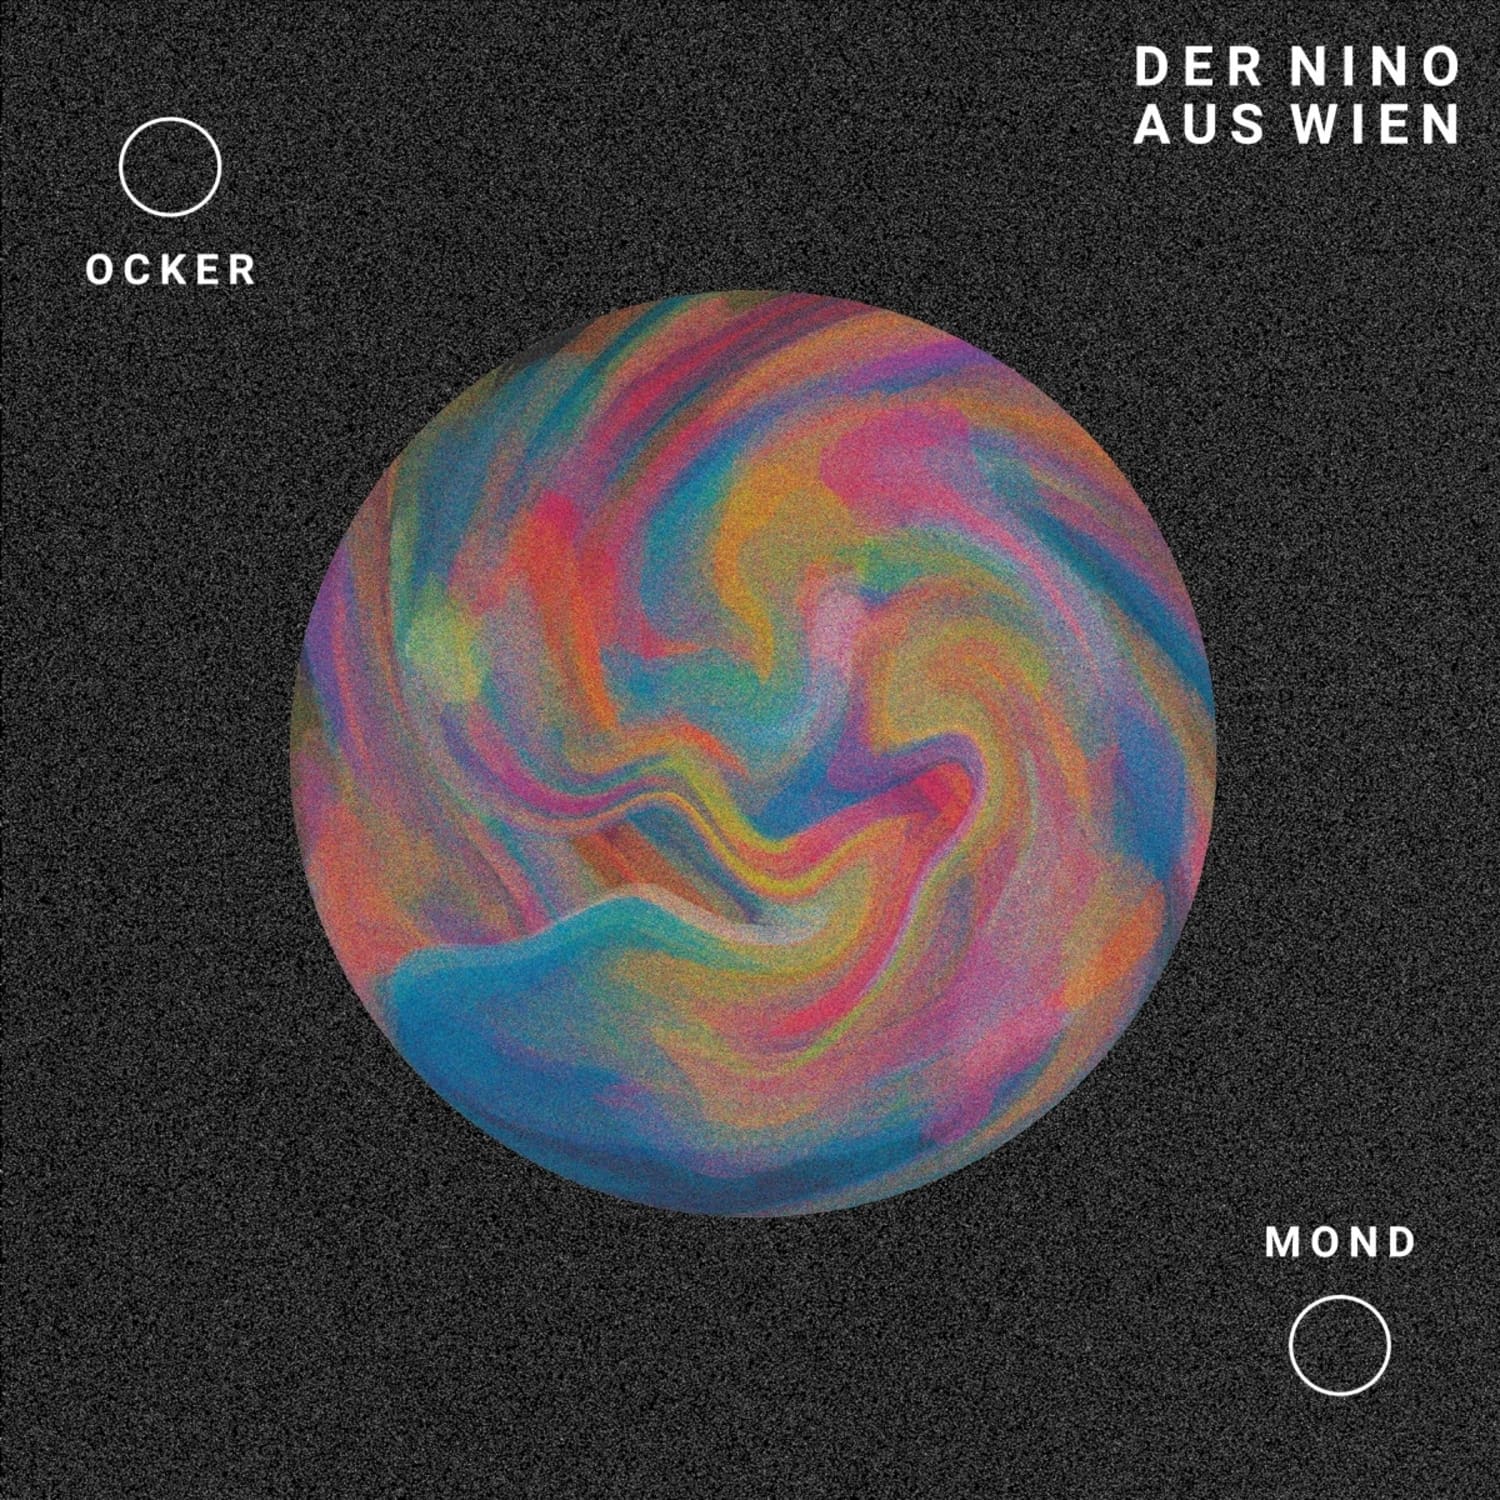 Der Nino aus Wien - OCKER MOND 